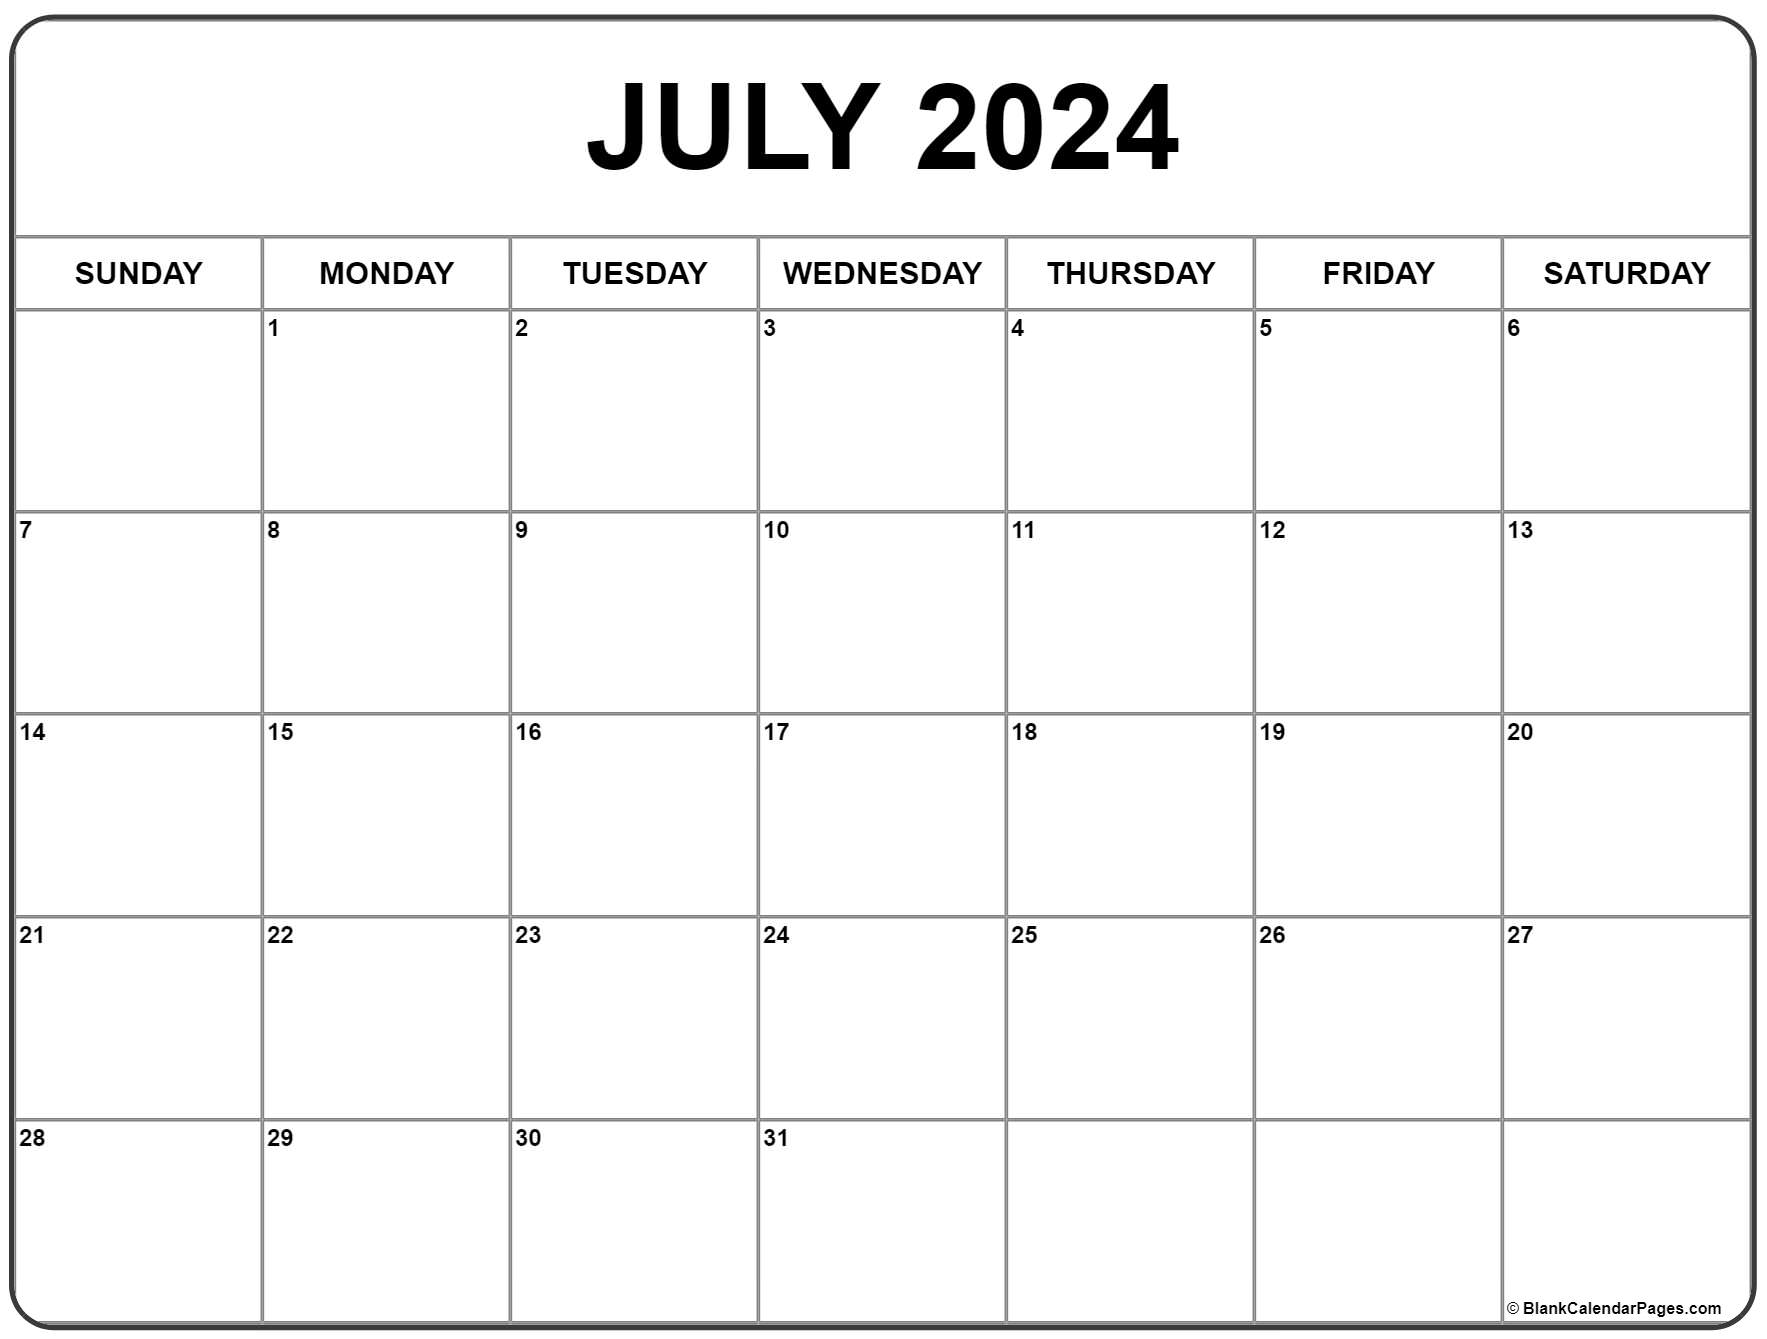 Summer 2022 Calendar Template July 2022 Calendar | Free Printable Calendar Templates